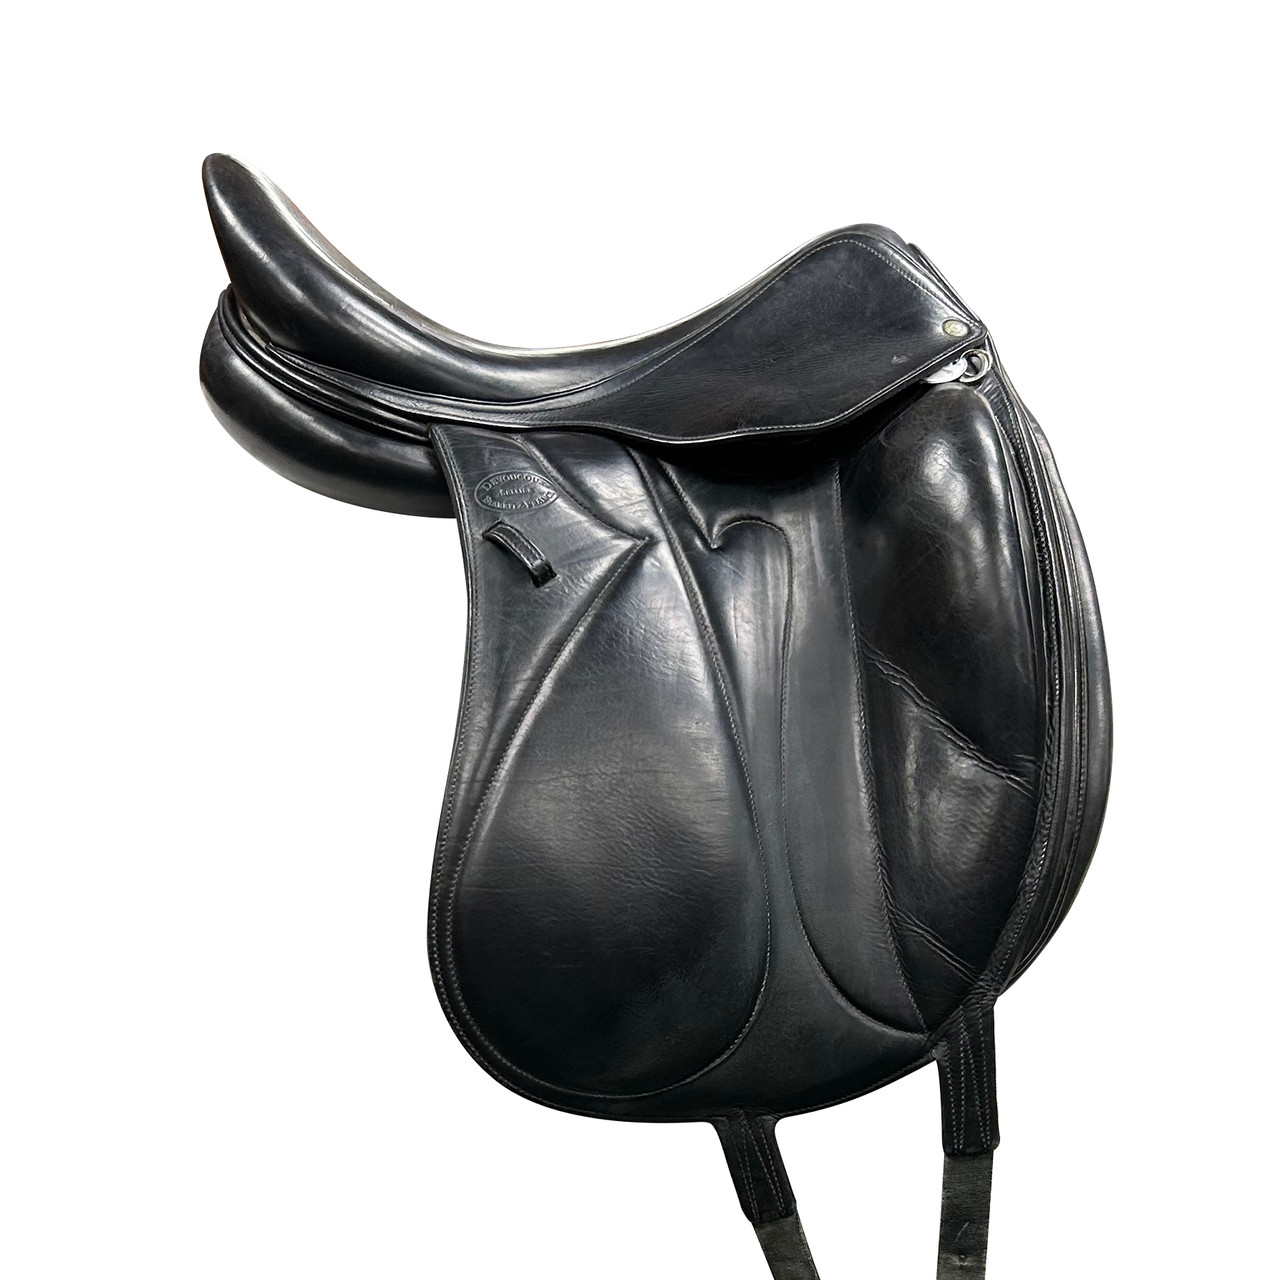 SOLD** 2004 Devoucoux Makila Monoflap Dressage Saddle, 17.5 Seat